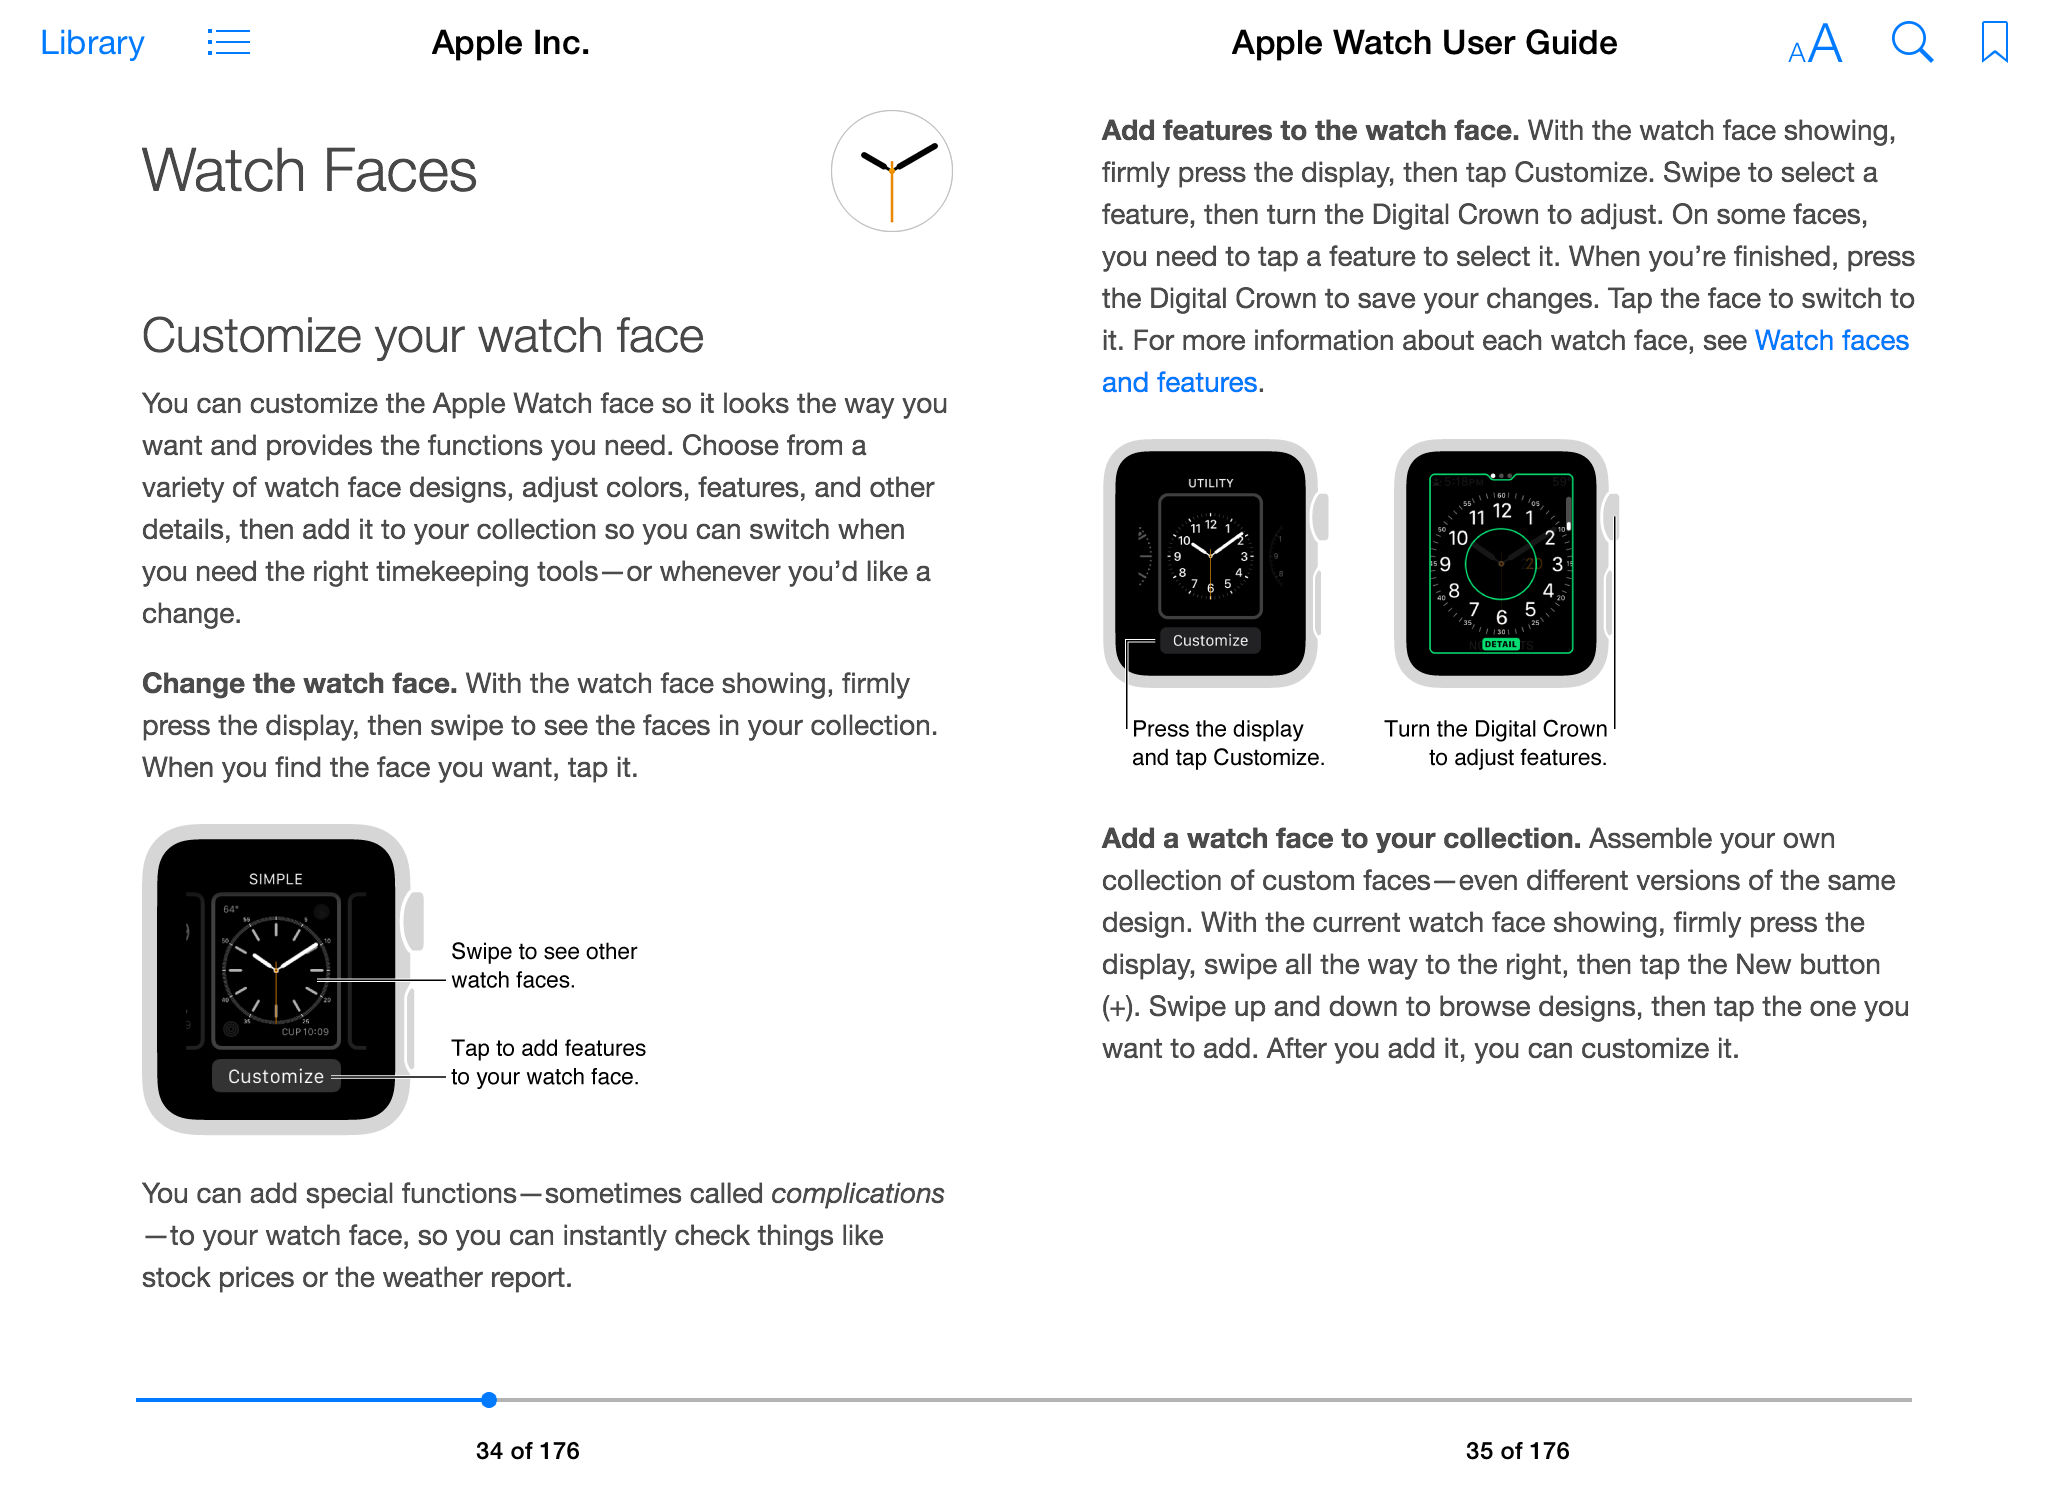 Apple Watch User Guide iBook screenshot 002